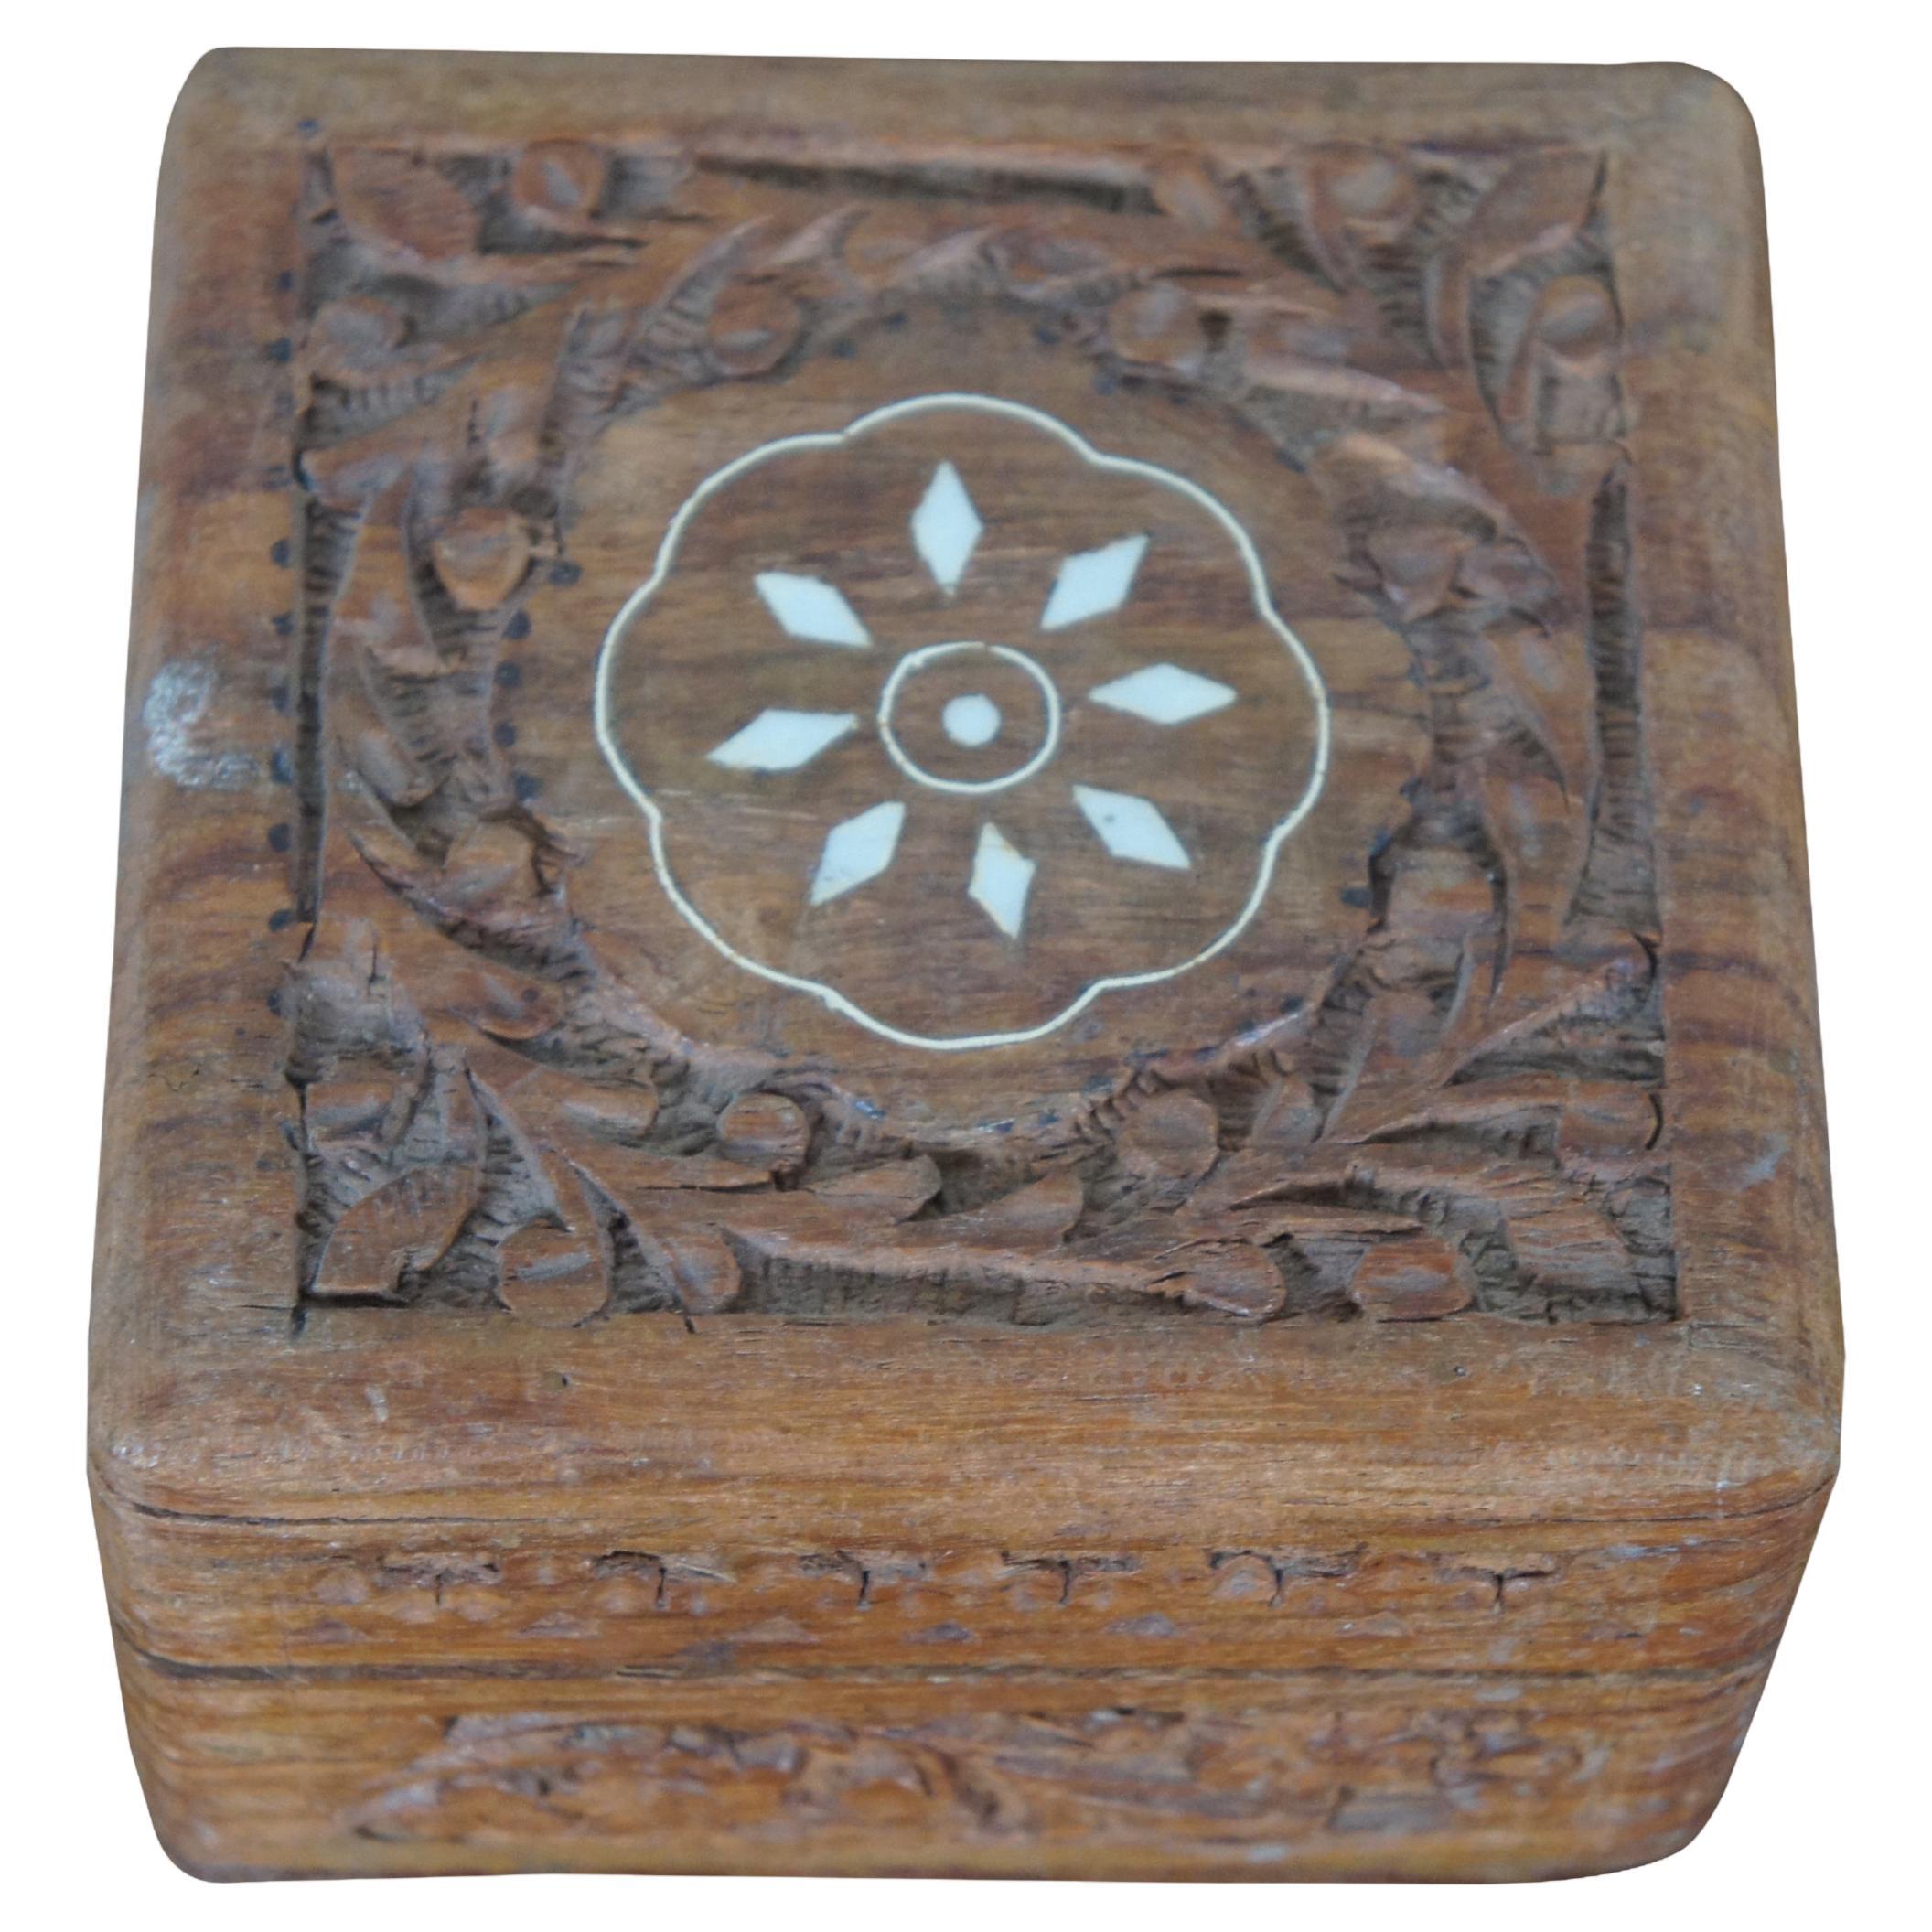 Indian Sheesham Rosewood Carved Inlaid Square Floral Jewelry Keepsake Box 4"